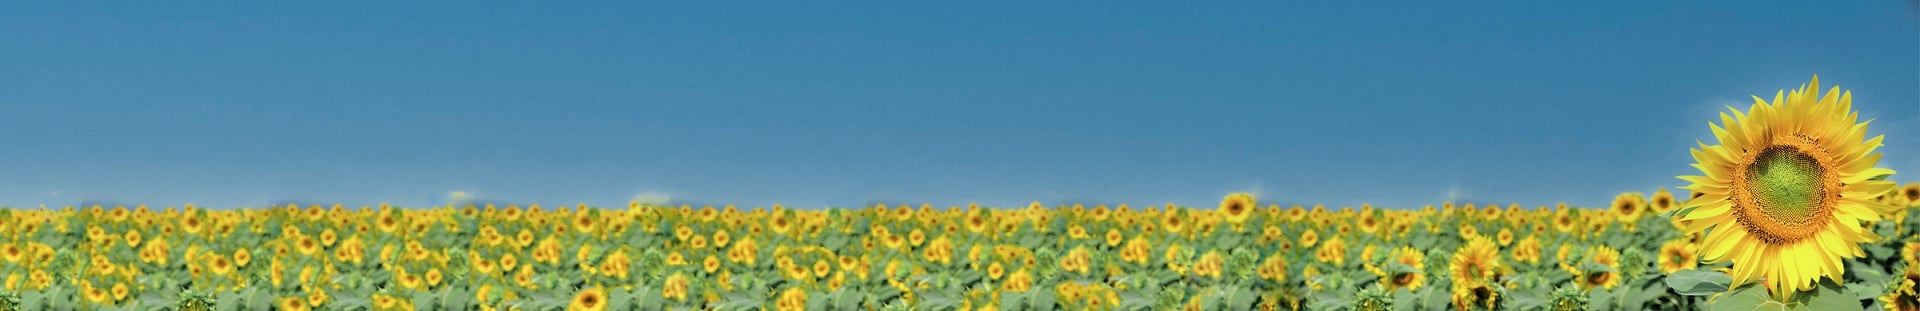 bnr-field-of-sunflowers-01